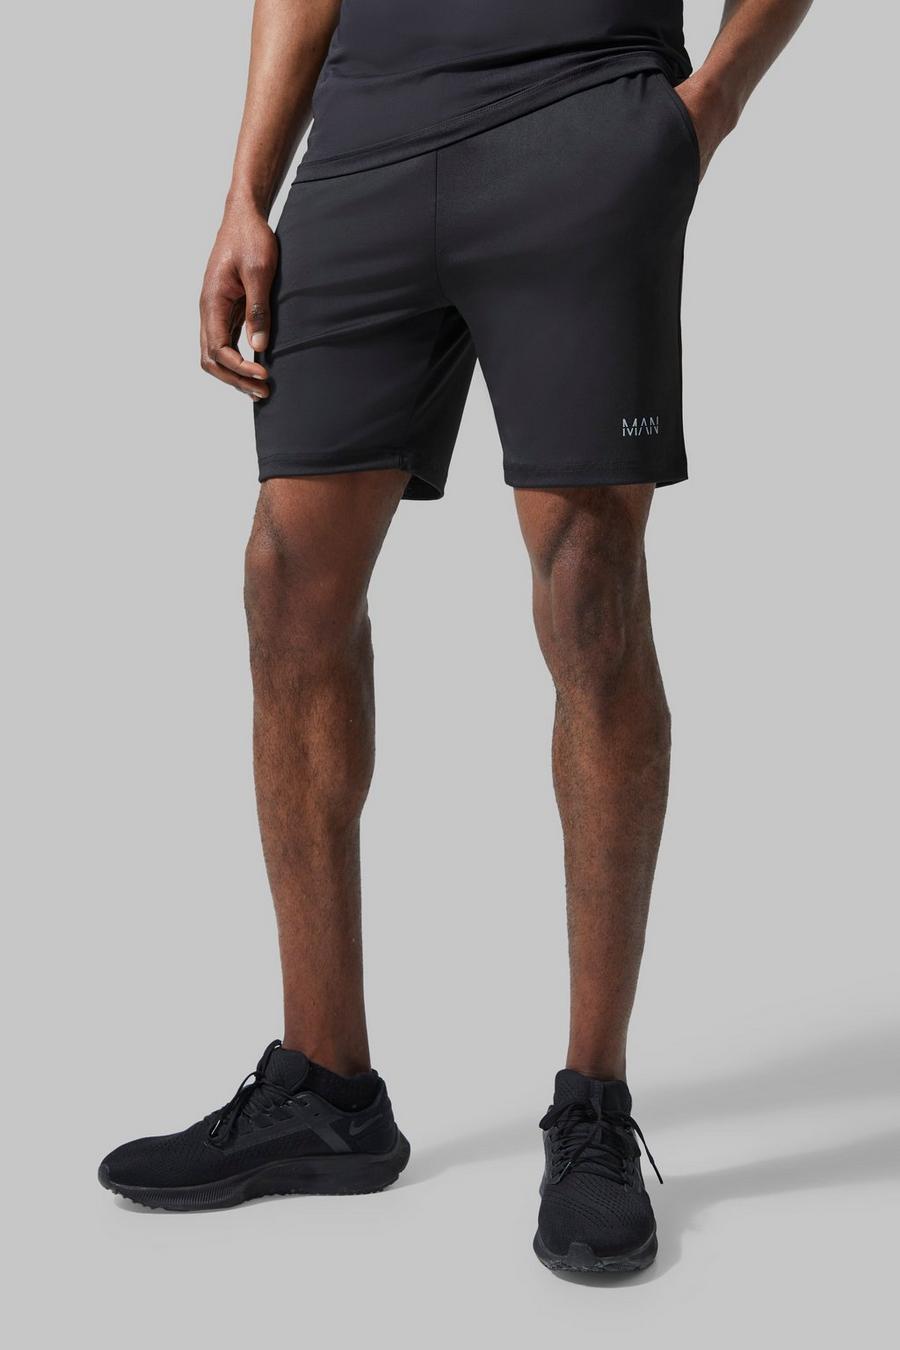 Pantaloncini Man Active Gym per alta performance, Black